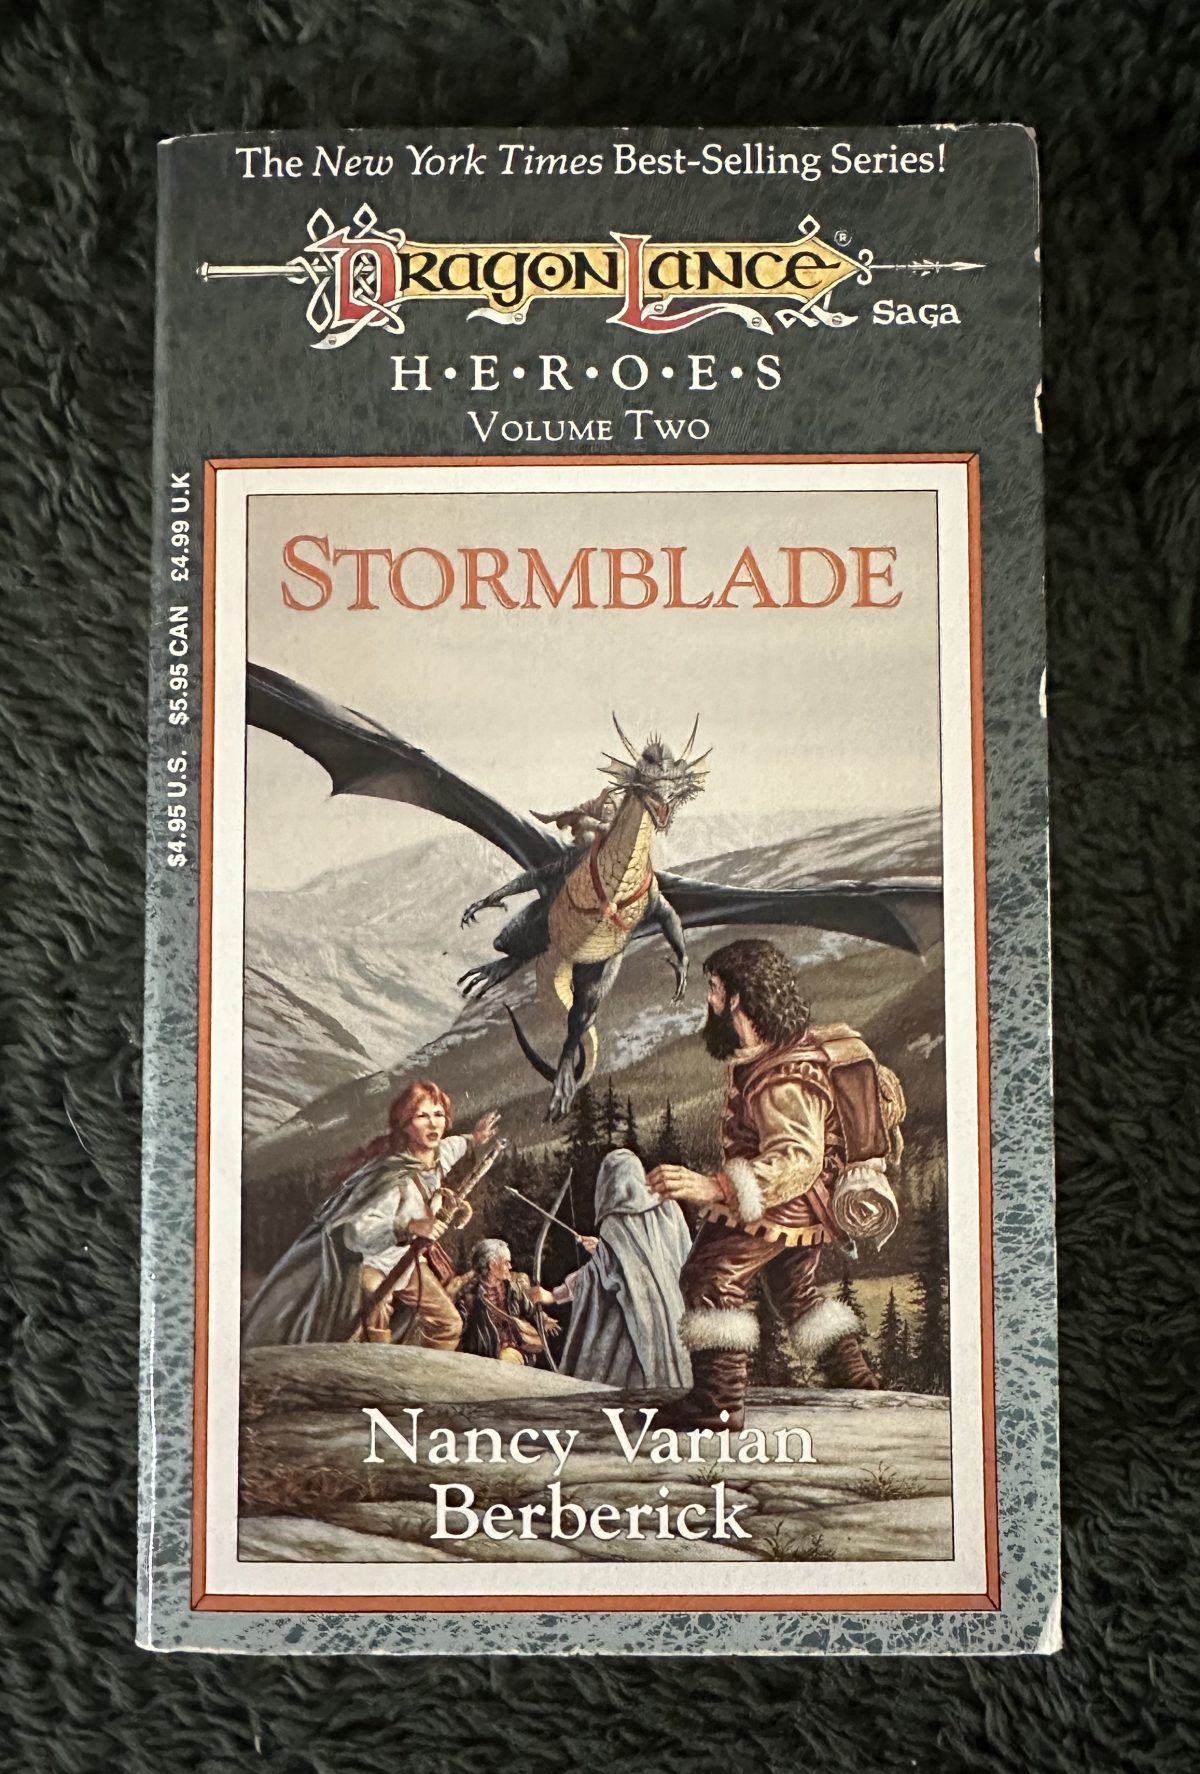 DragonLance Heroes Volume Two: Stormblade